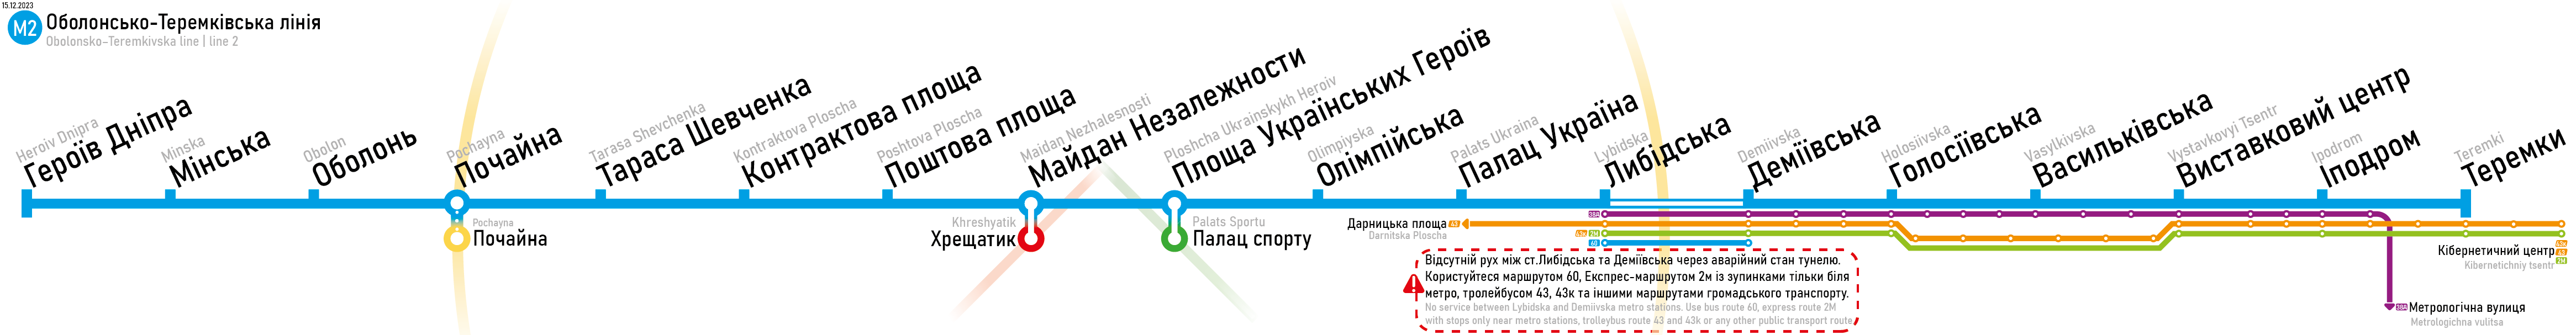 Киев — Метрополитен — Схемы линий